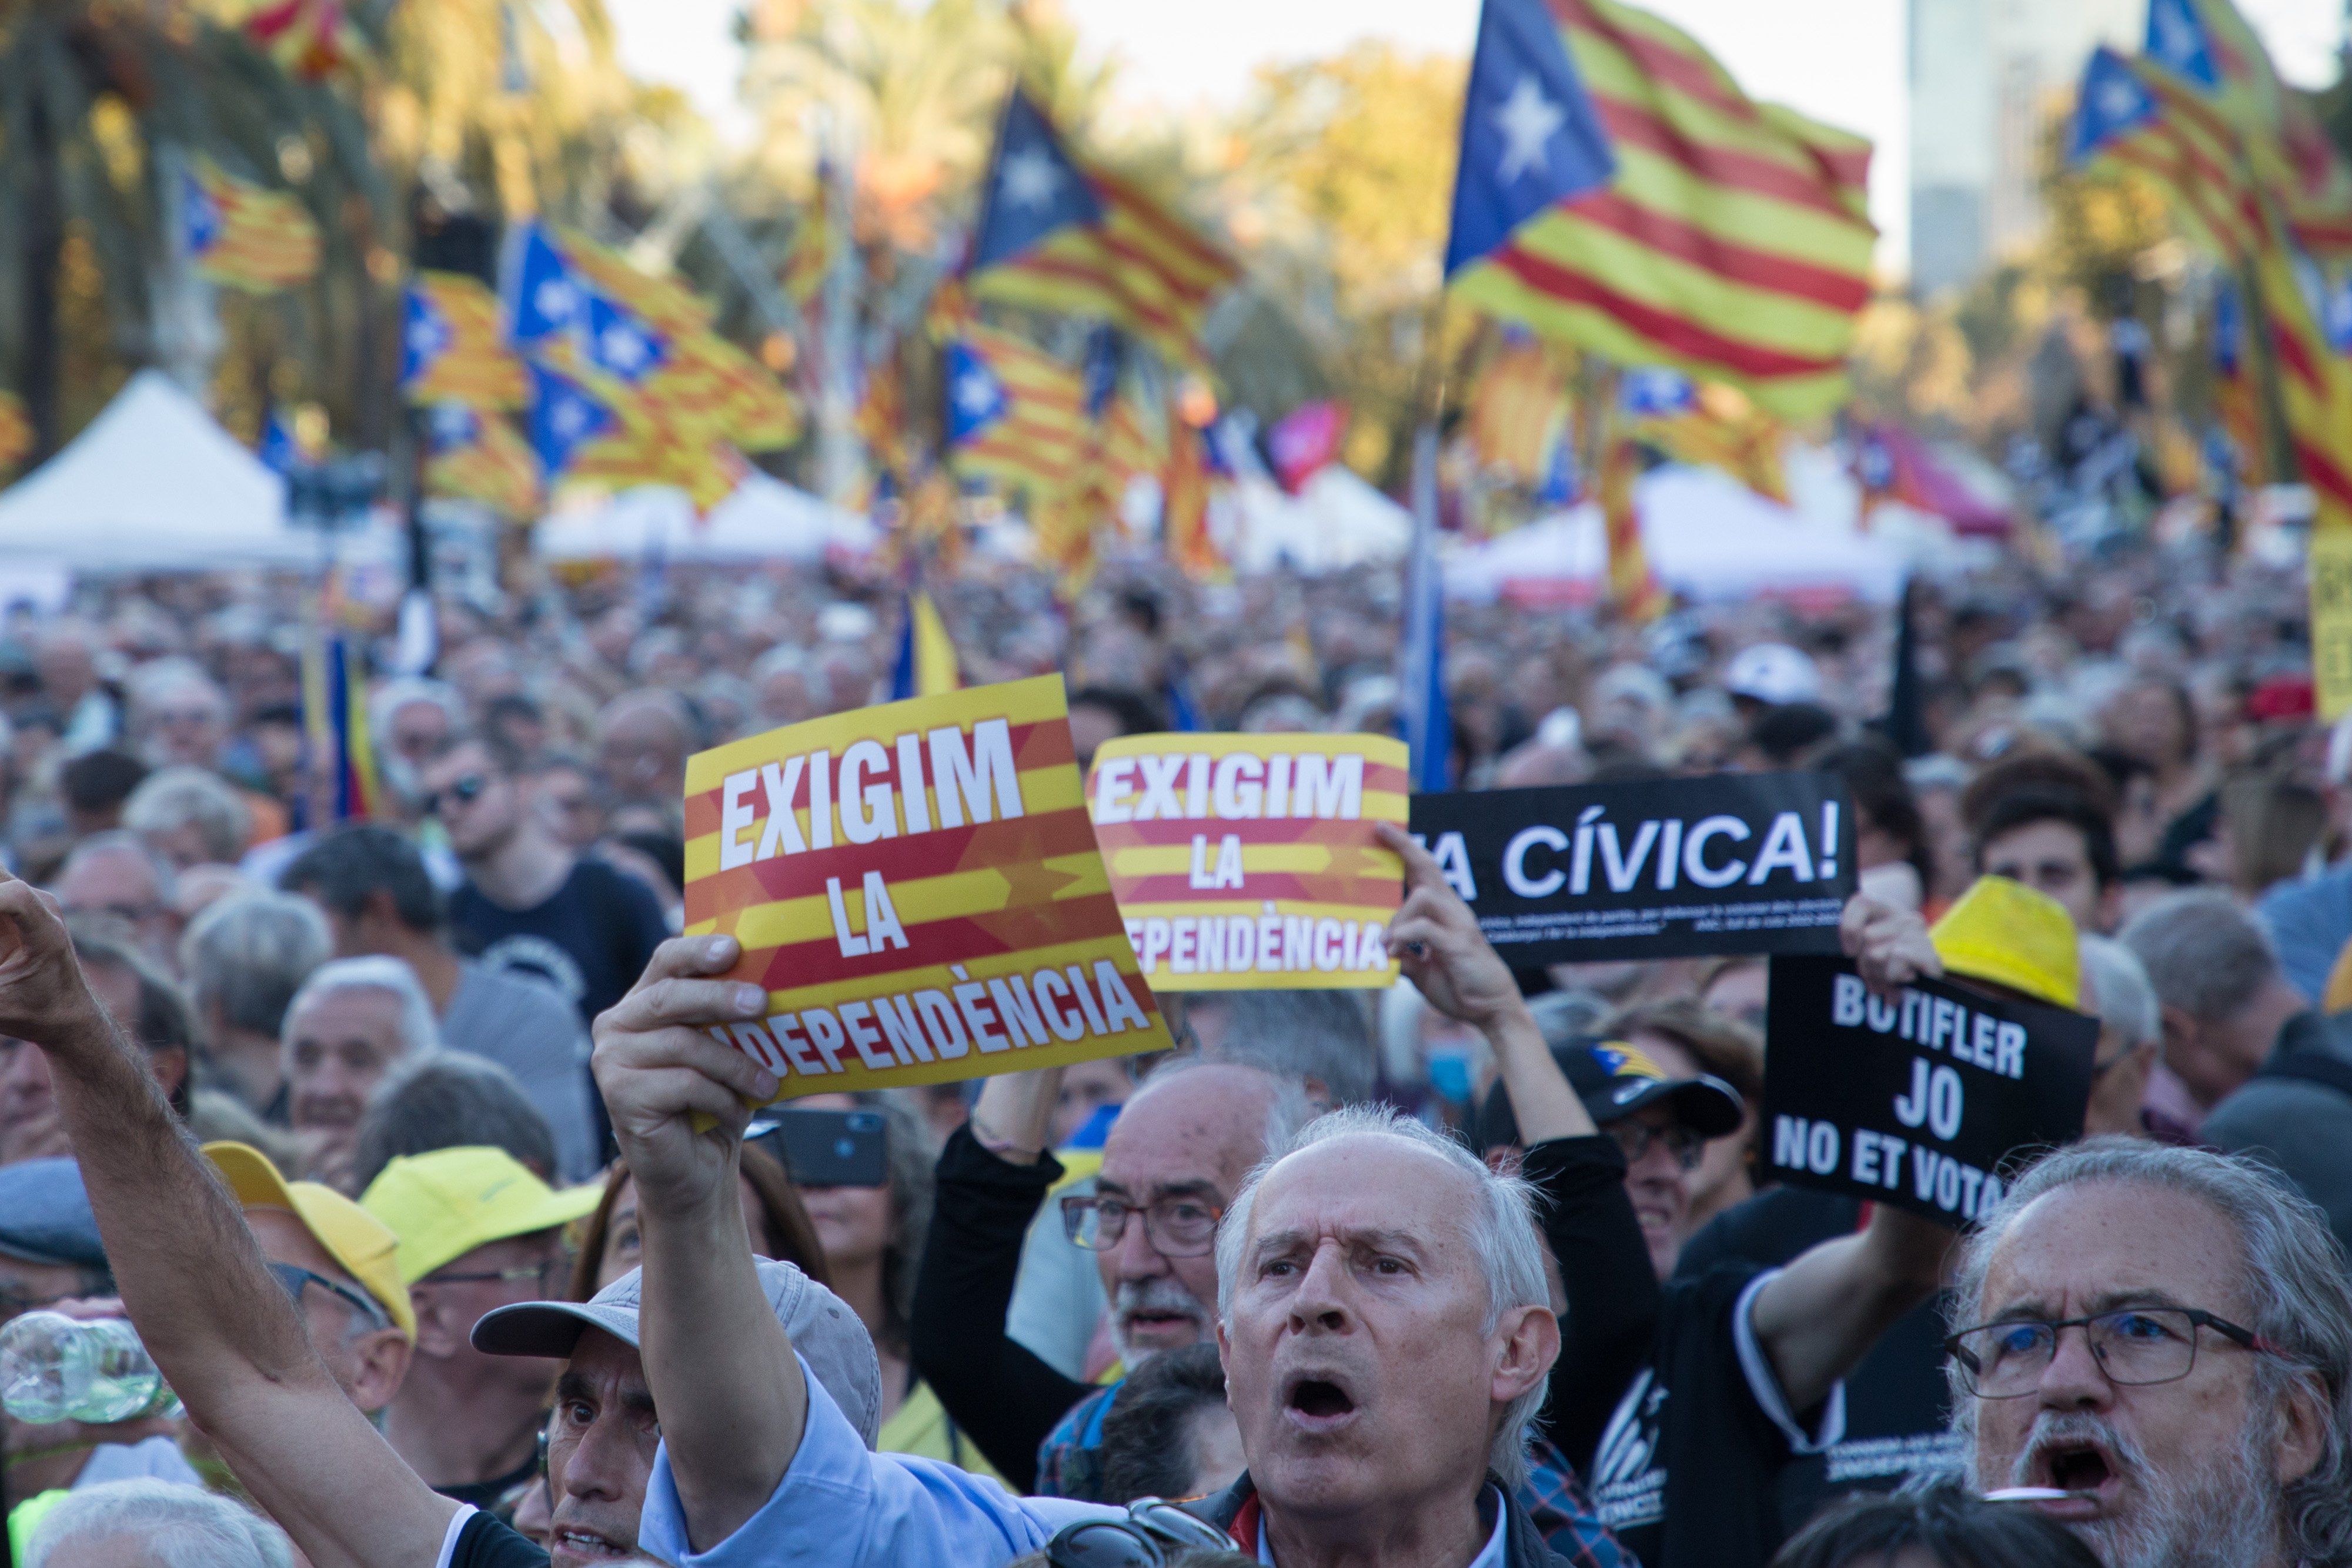 Spanish prosecutors maintain classification of Catalan independence movement as "terrorist"